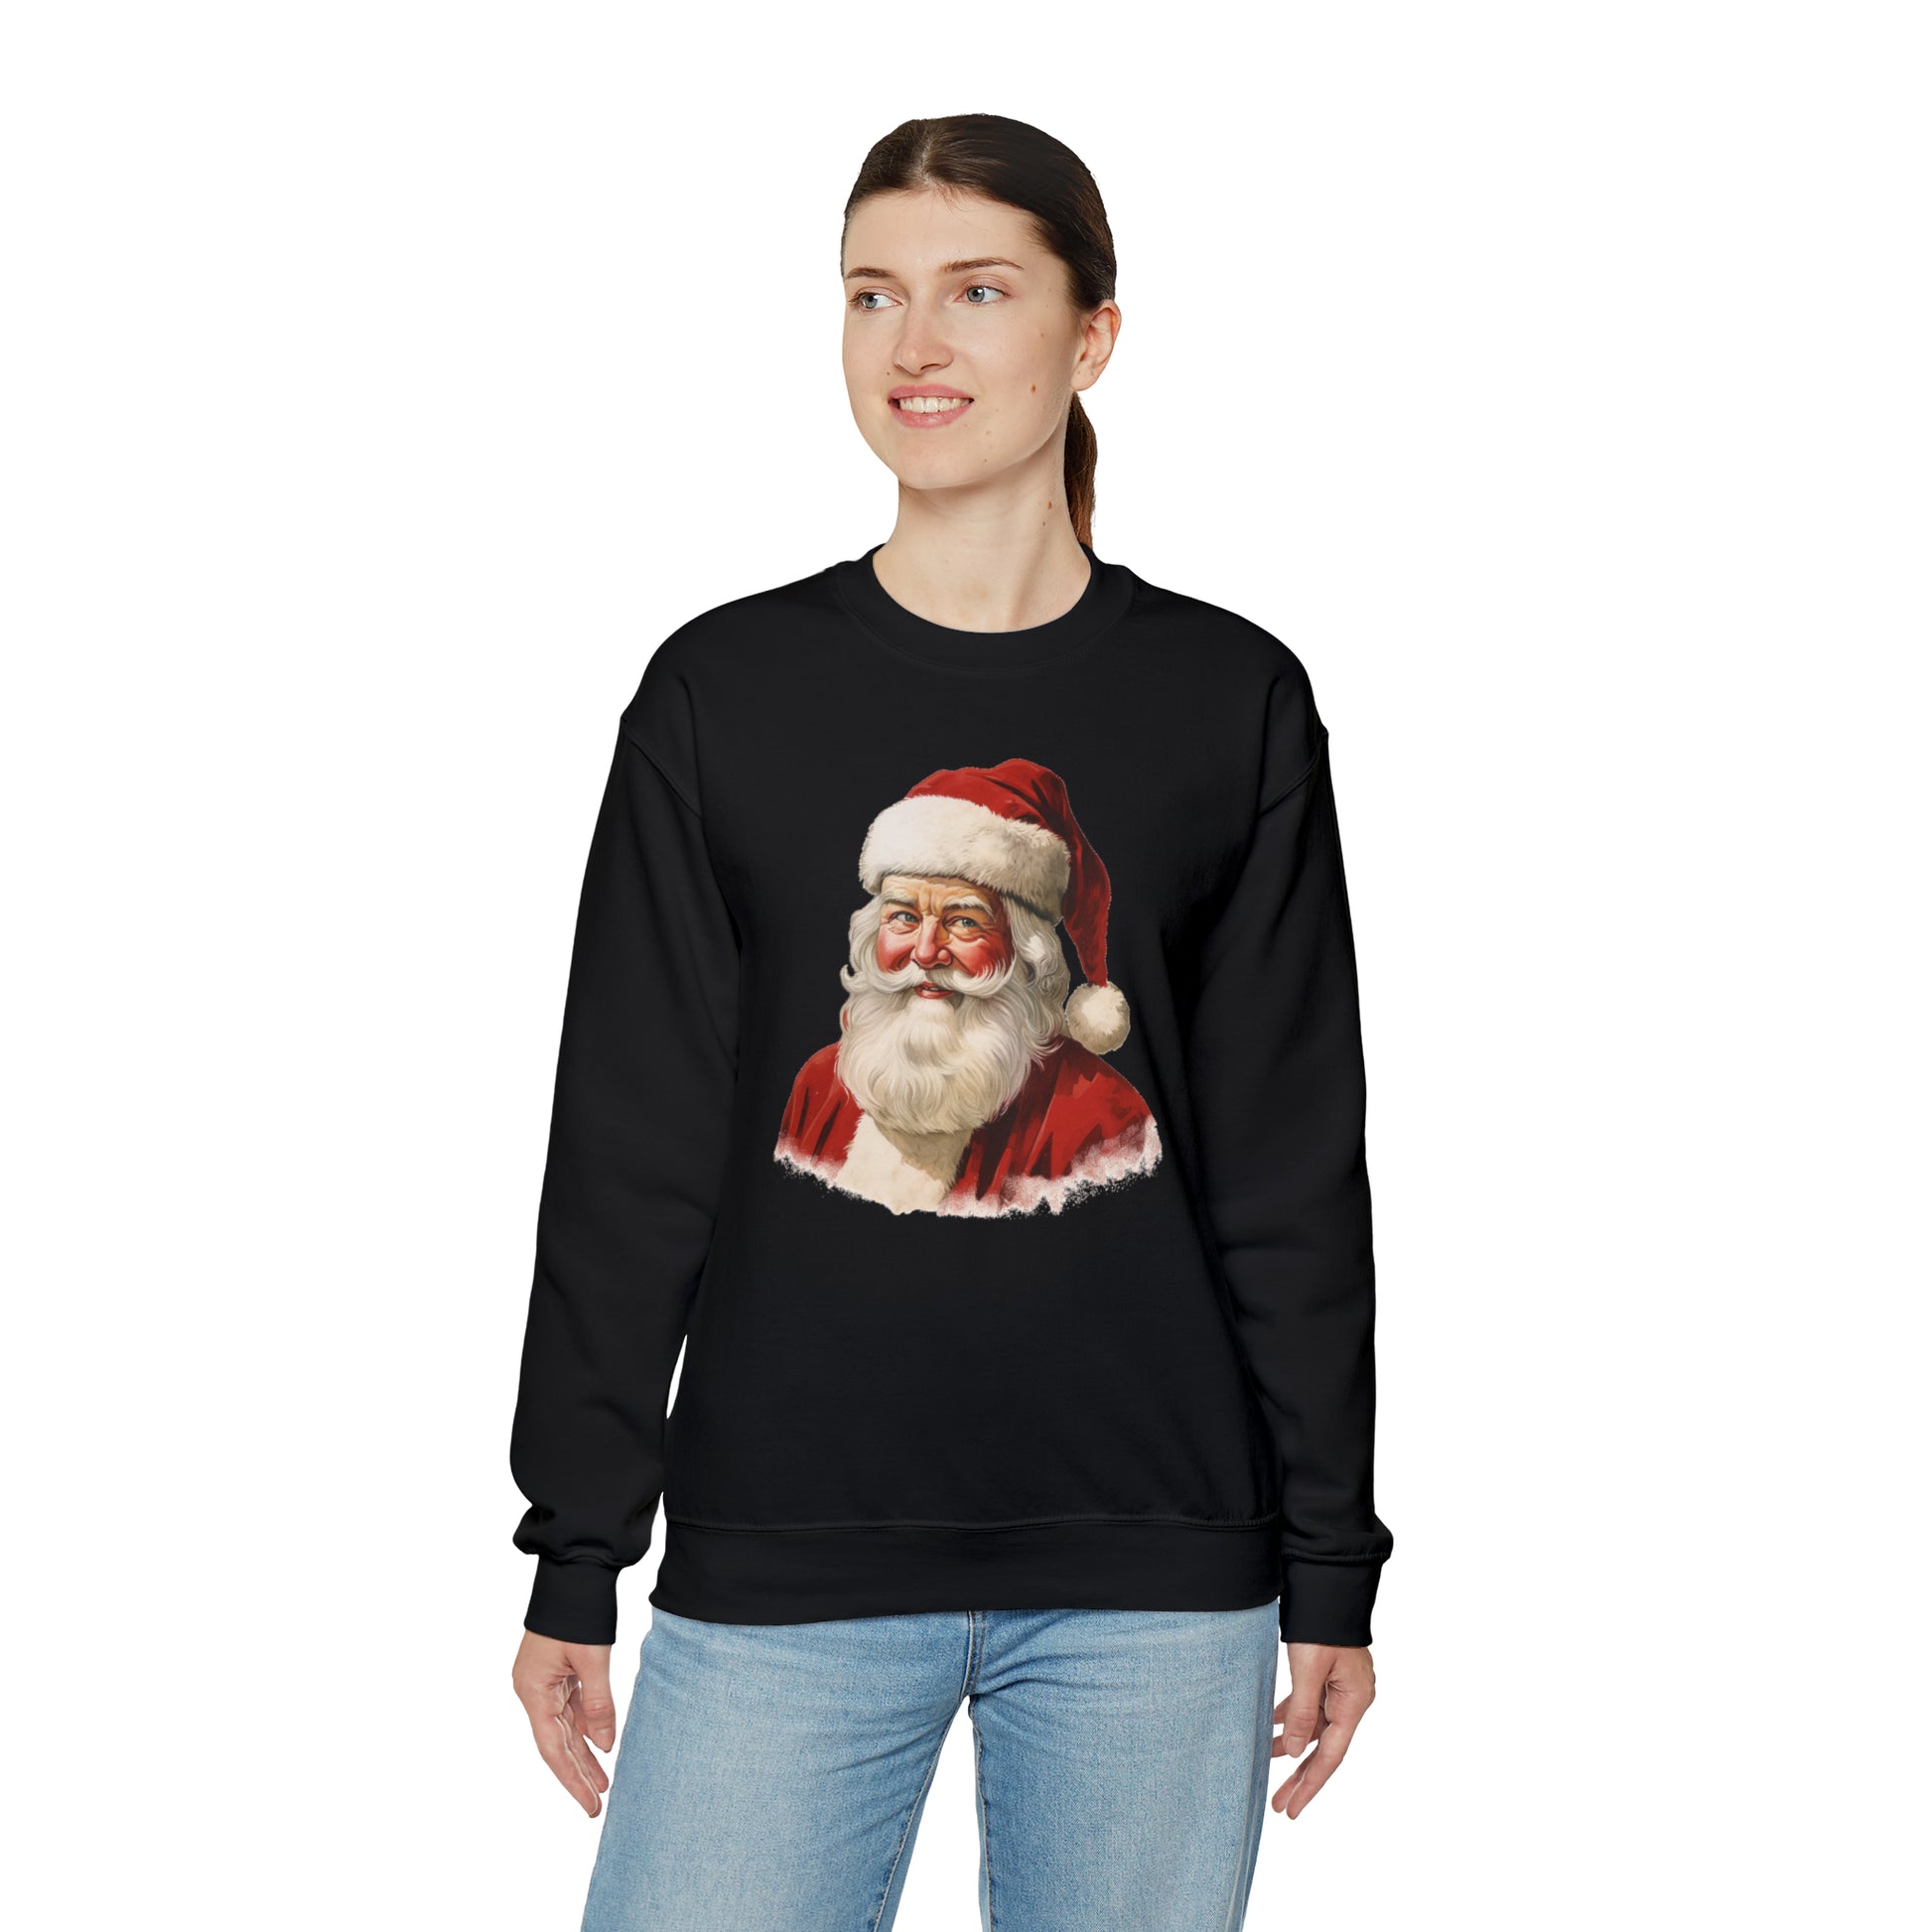 Vintage Santa Claus Sweatshirt, Retro Graphic Christmas Xmas Crewneck Fleece Cotton Sweater Jumper Pullover Men Women Aesthetic Top Starcove Fashion